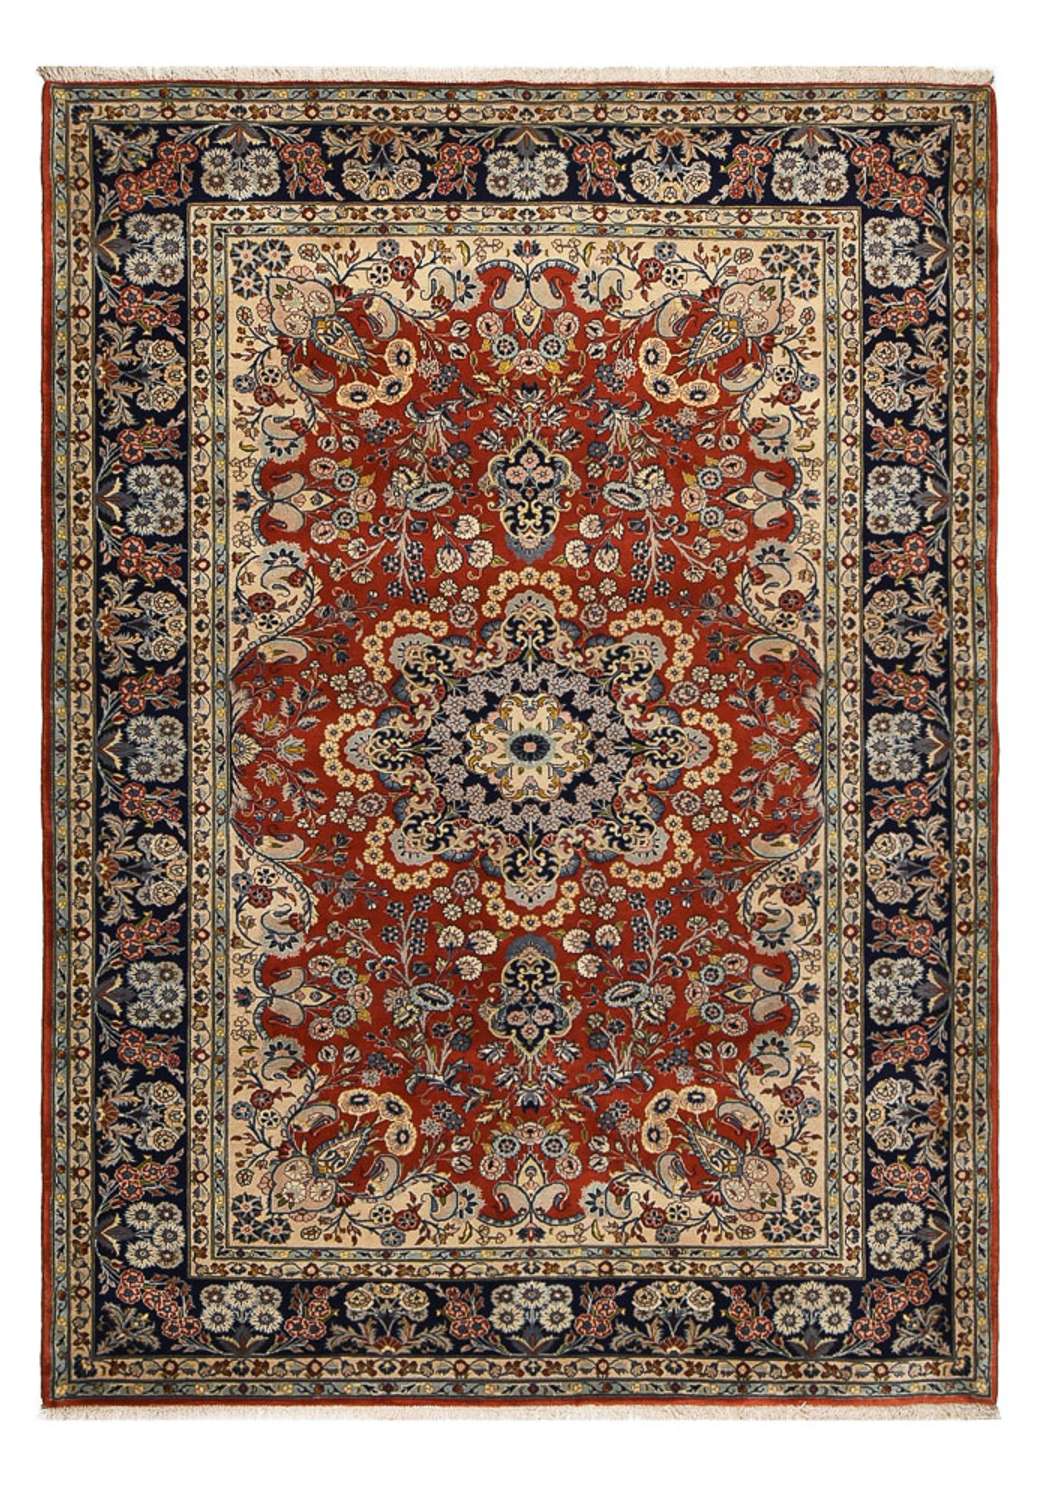 Tapis persan - Keshan - 288 x 208 cm - rouge foncé